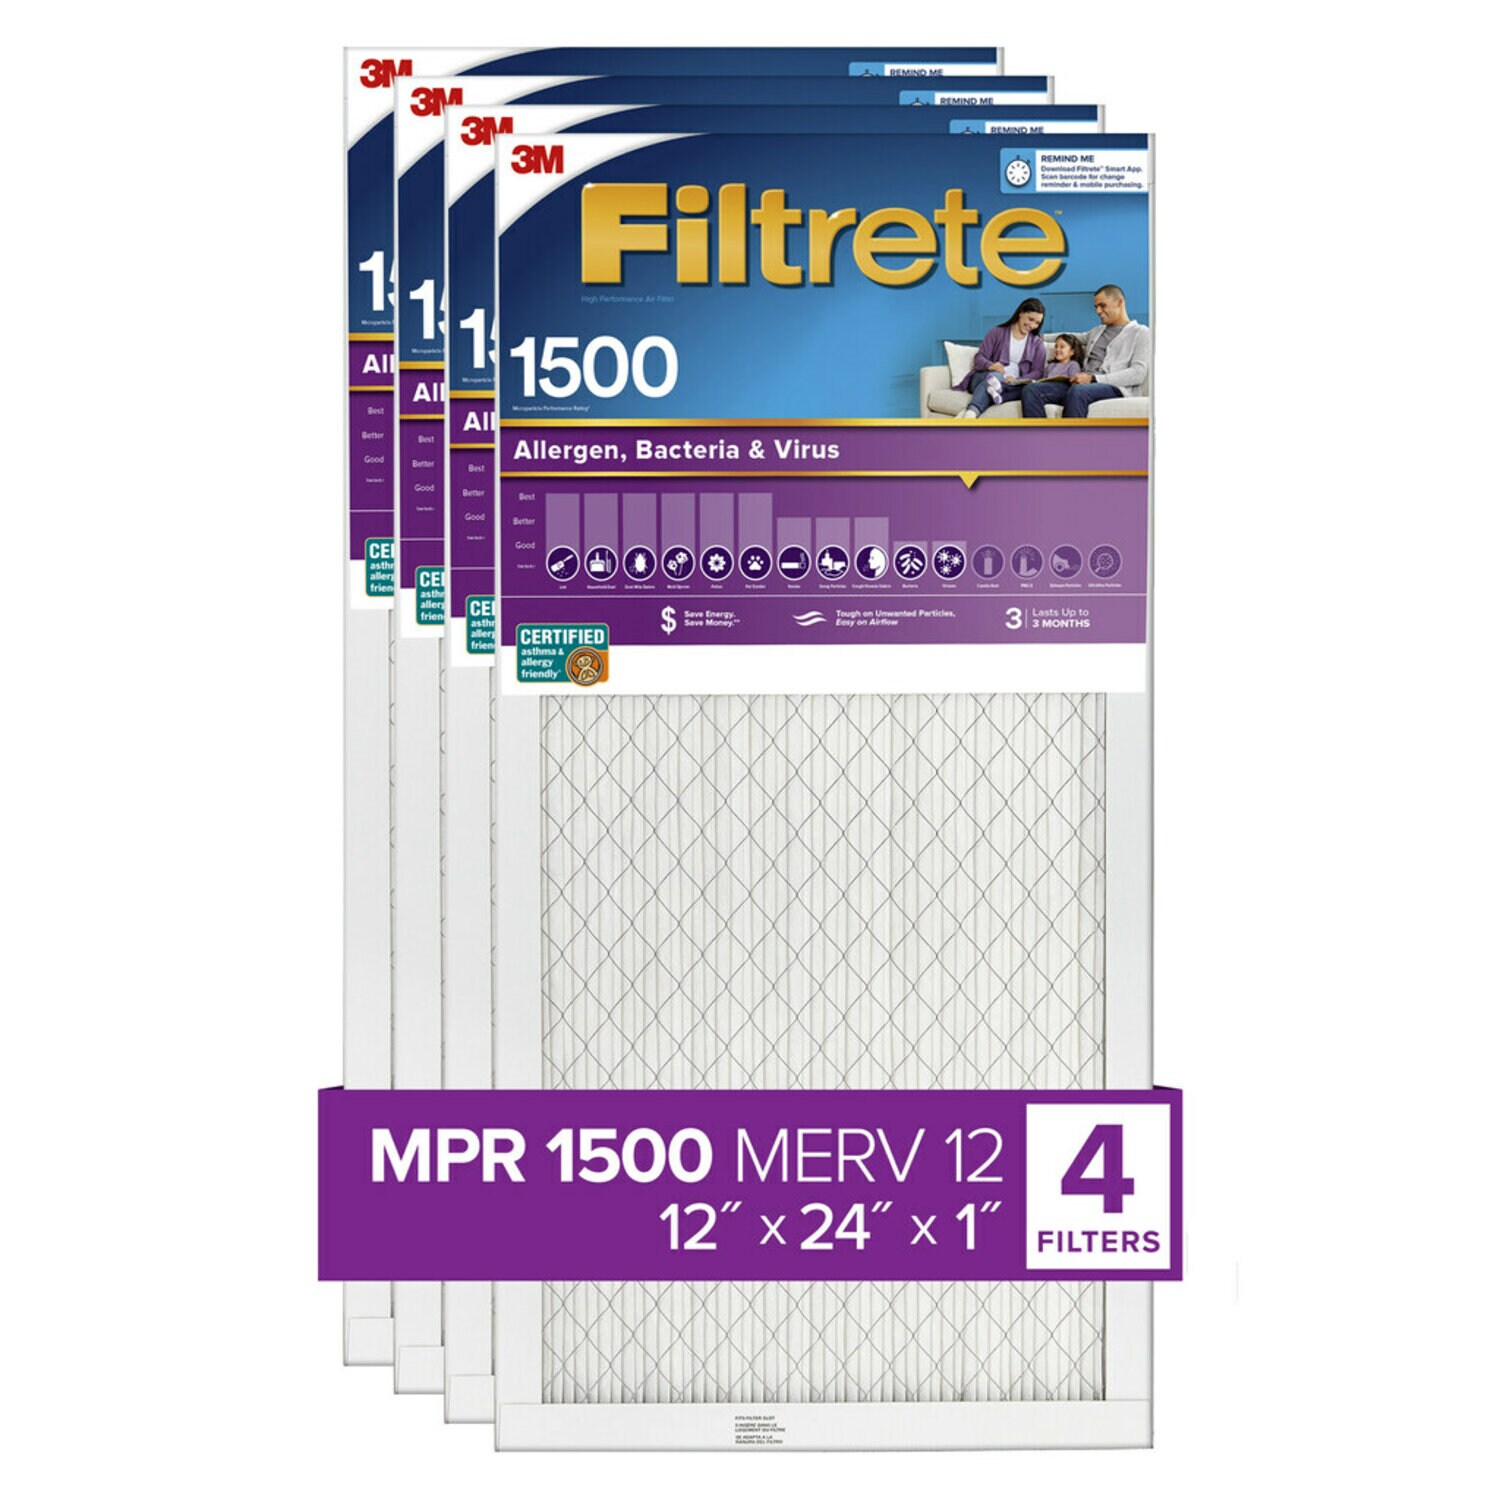 7100188680 - Filtrete Allergen, Bacteria & Virus Air Filter, 1500 MPR, 2020-4, 12 in x 24 in x 1 in (30,4 cm x 60,9 cm x 2,5 cm)